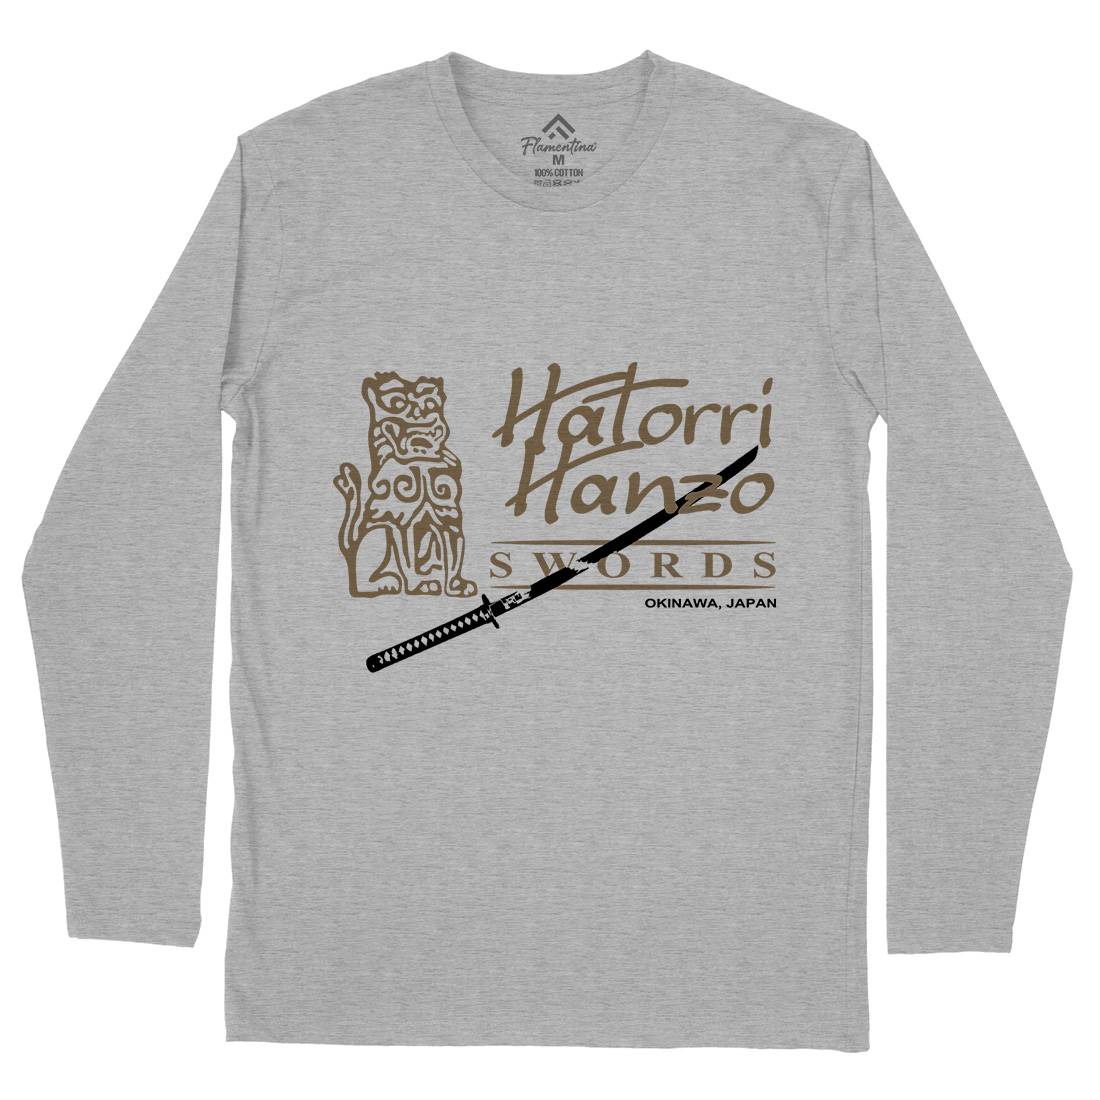 Hattori Hanzo Mens Long Sleeve T-Shirt Asian D418